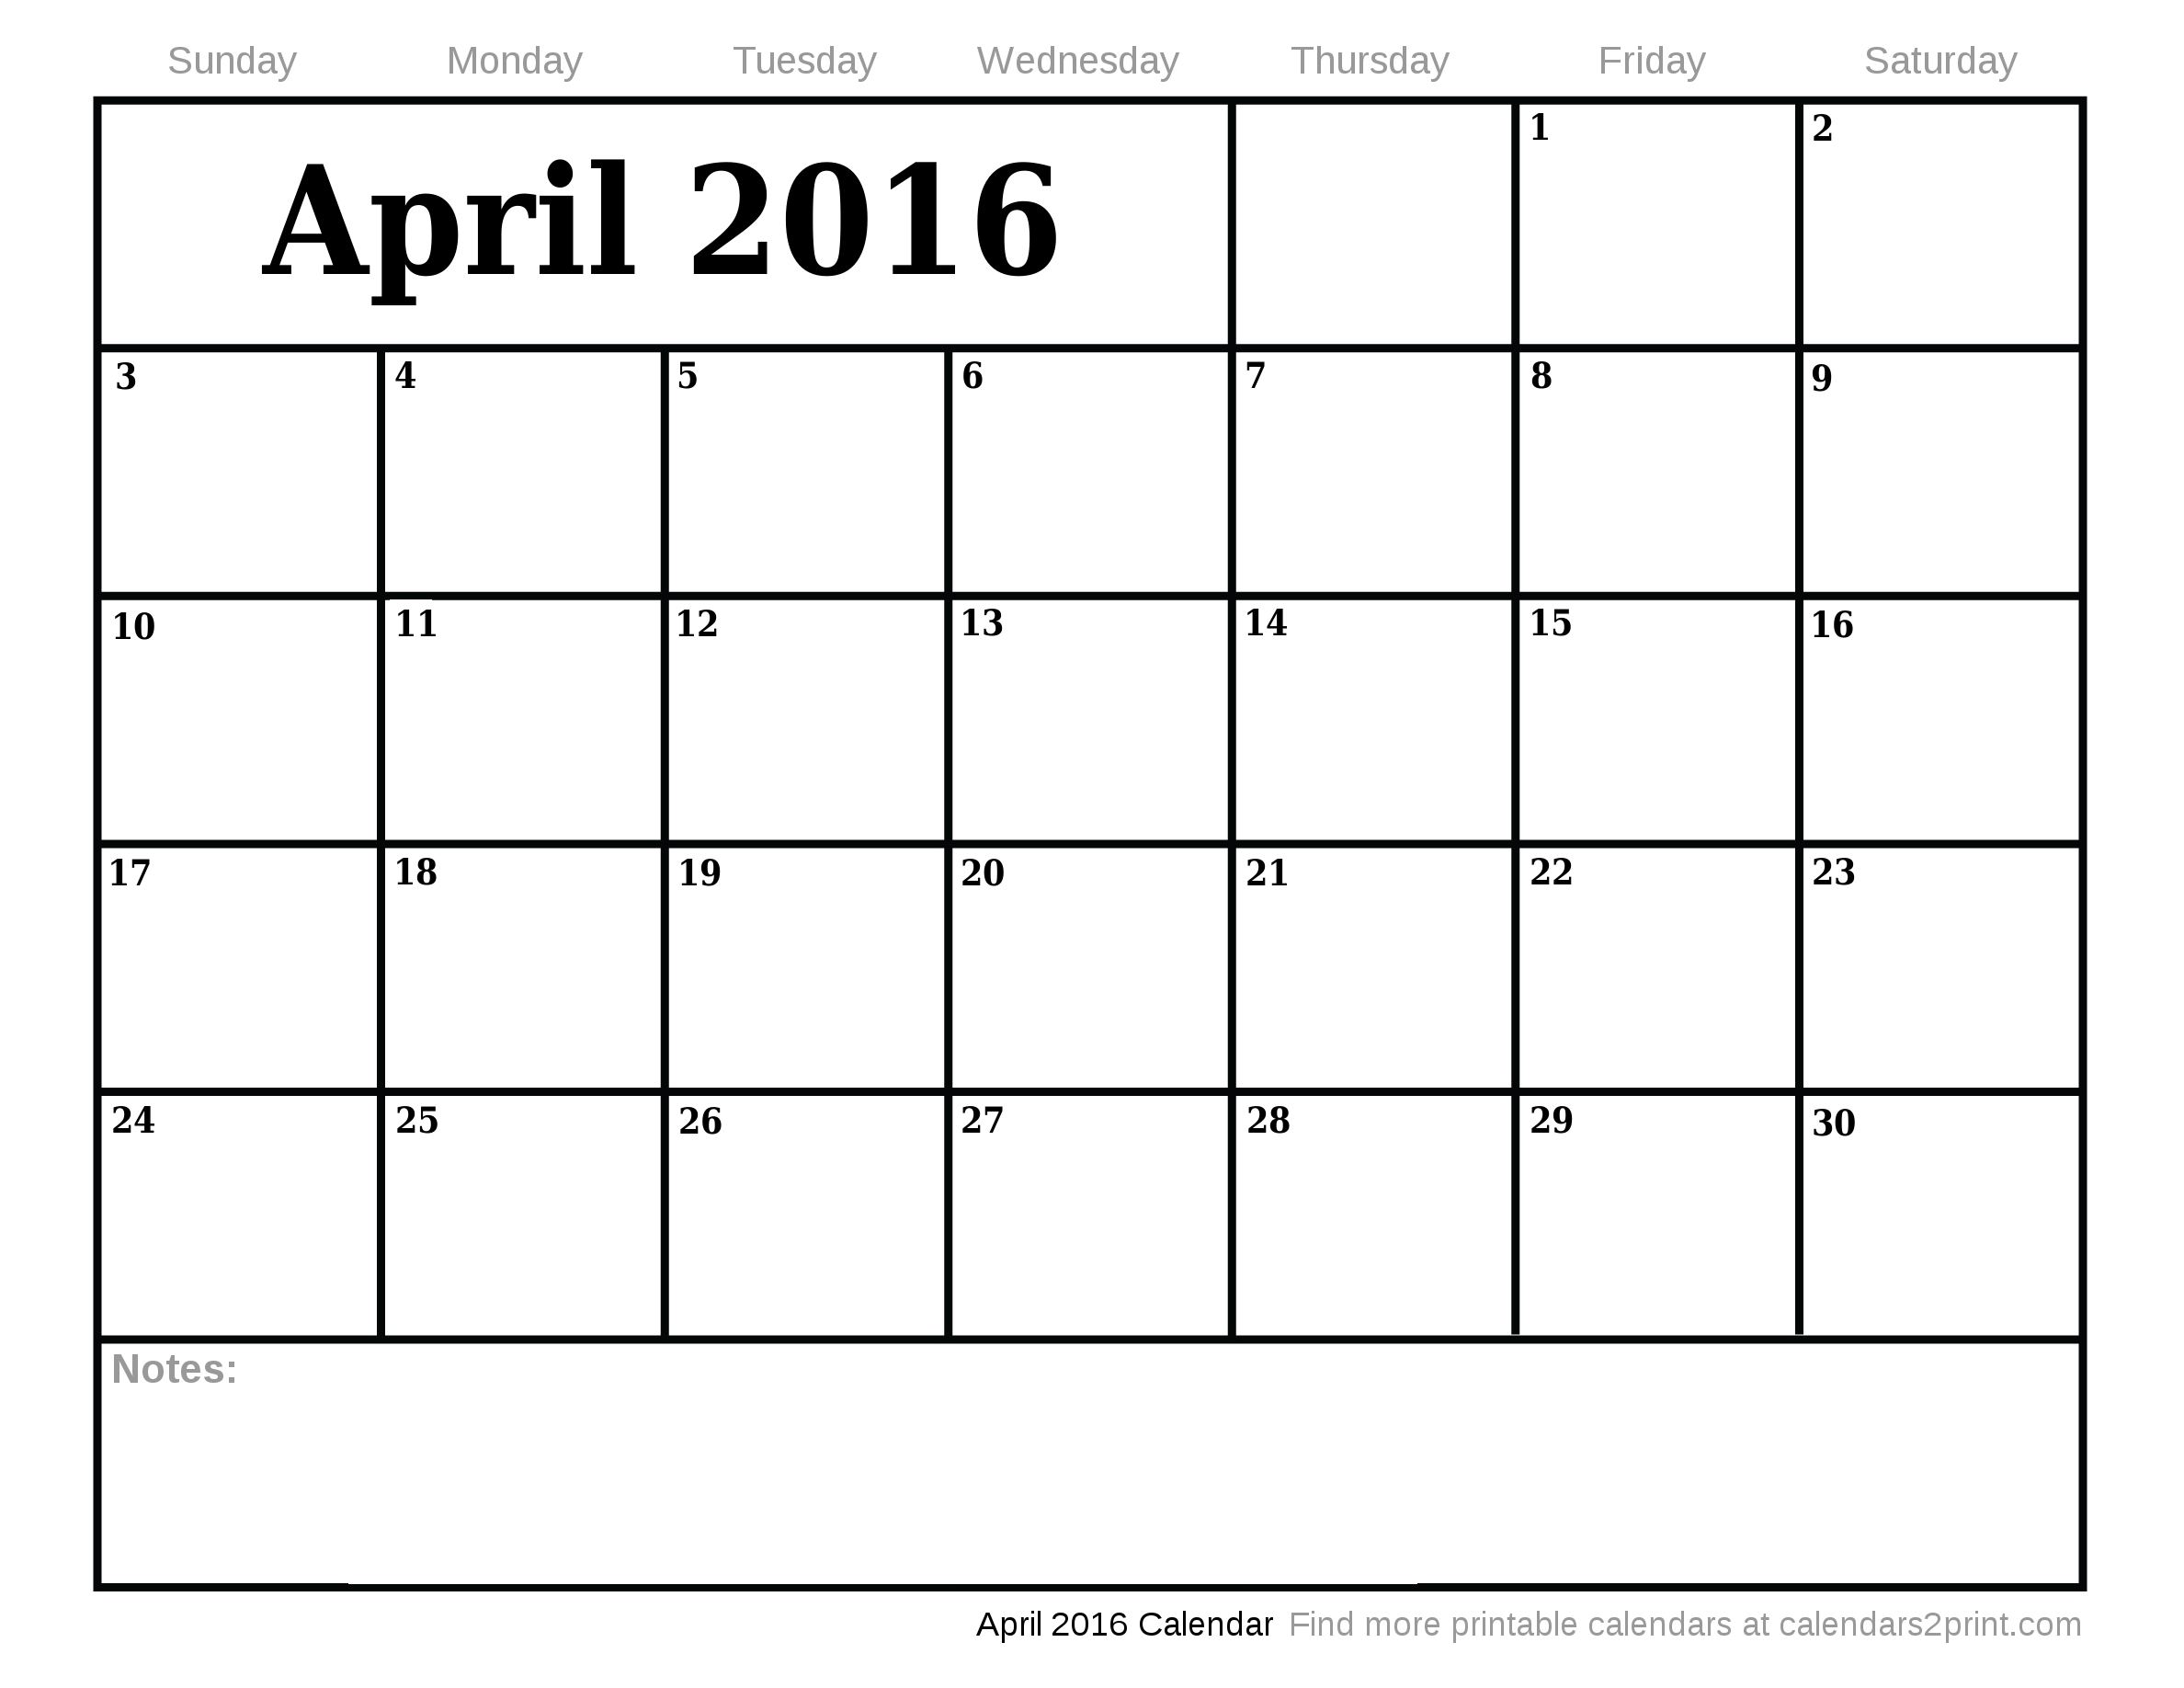 Apr 2016 Printable Calendar